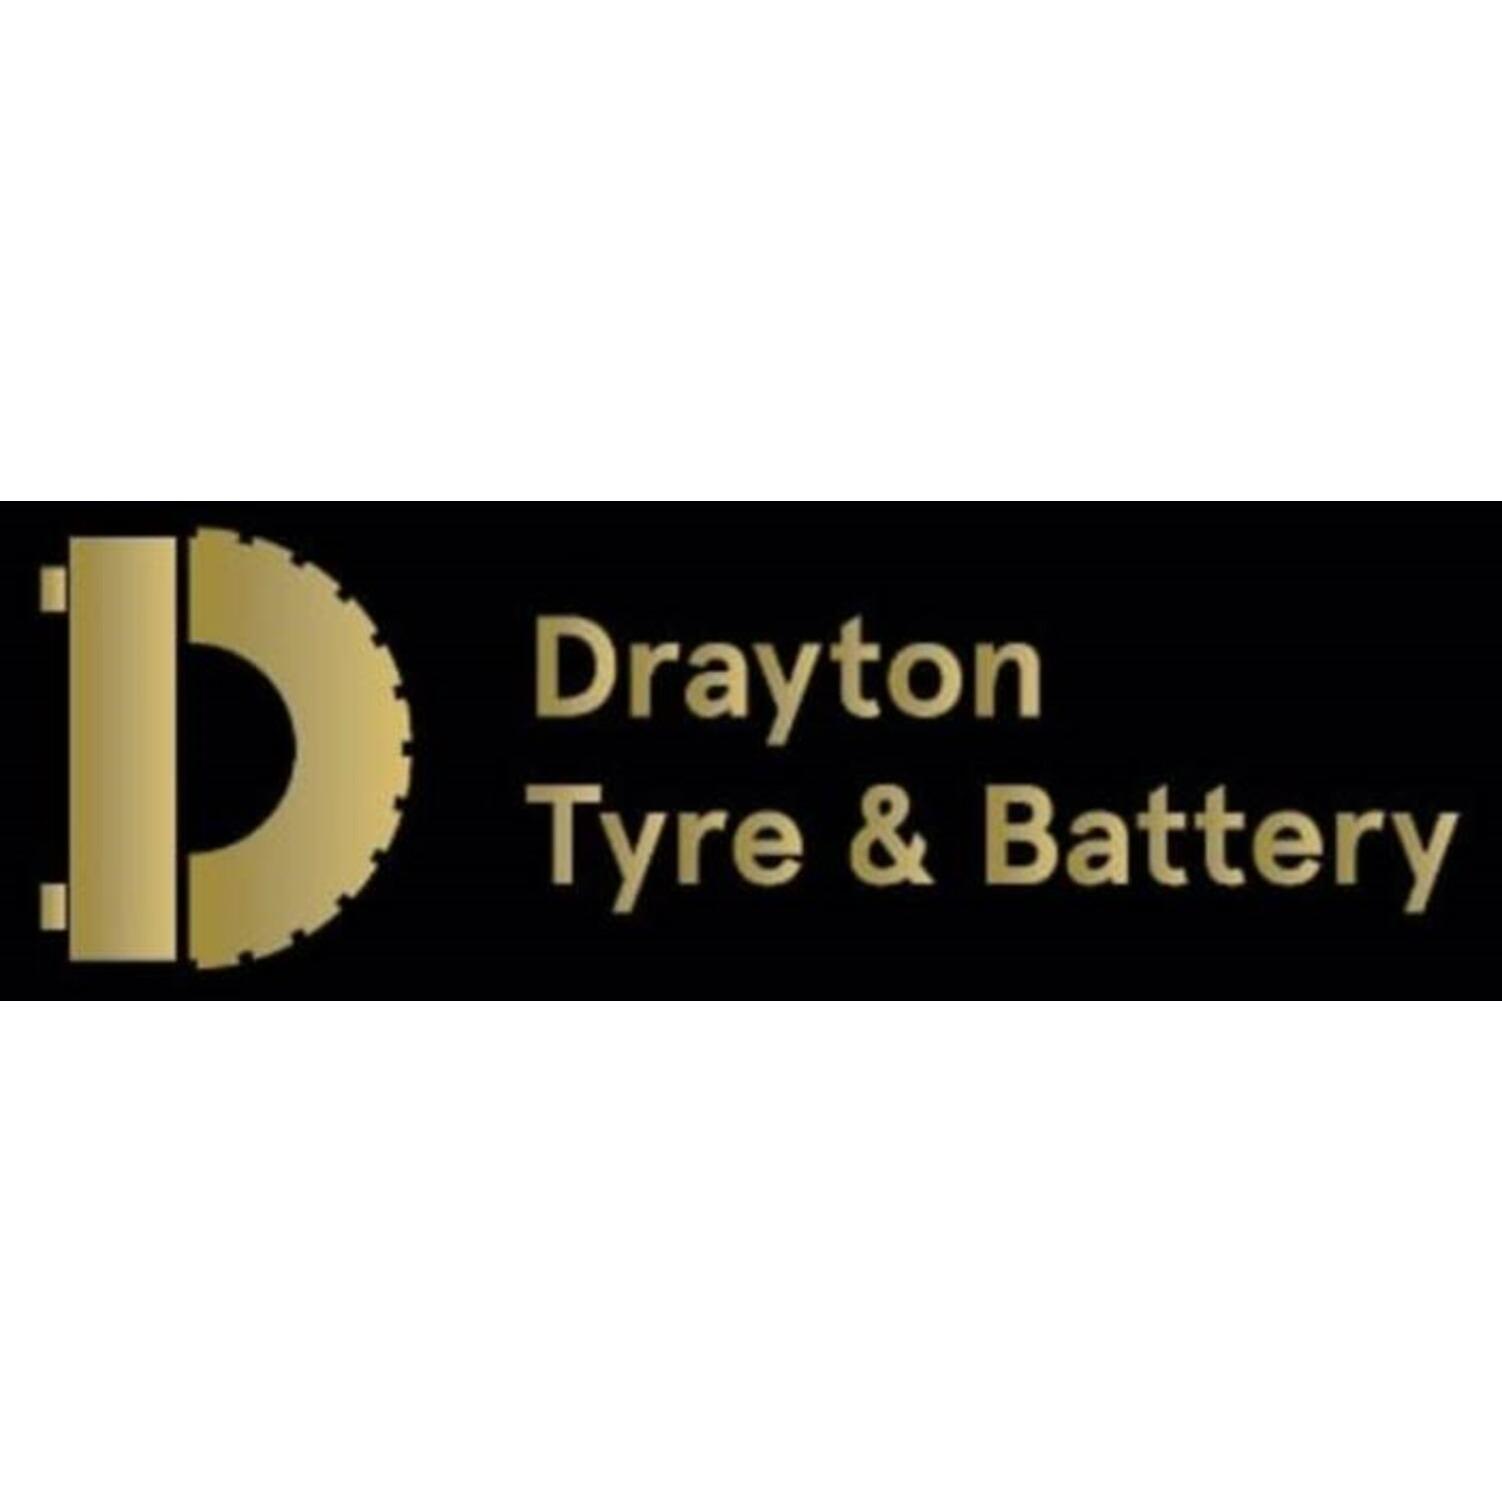 Drayton Tyre & Battery Ltd - Drayton, Norfolk NR8 6RL - 01603 260777 | ShowMeLocal.com